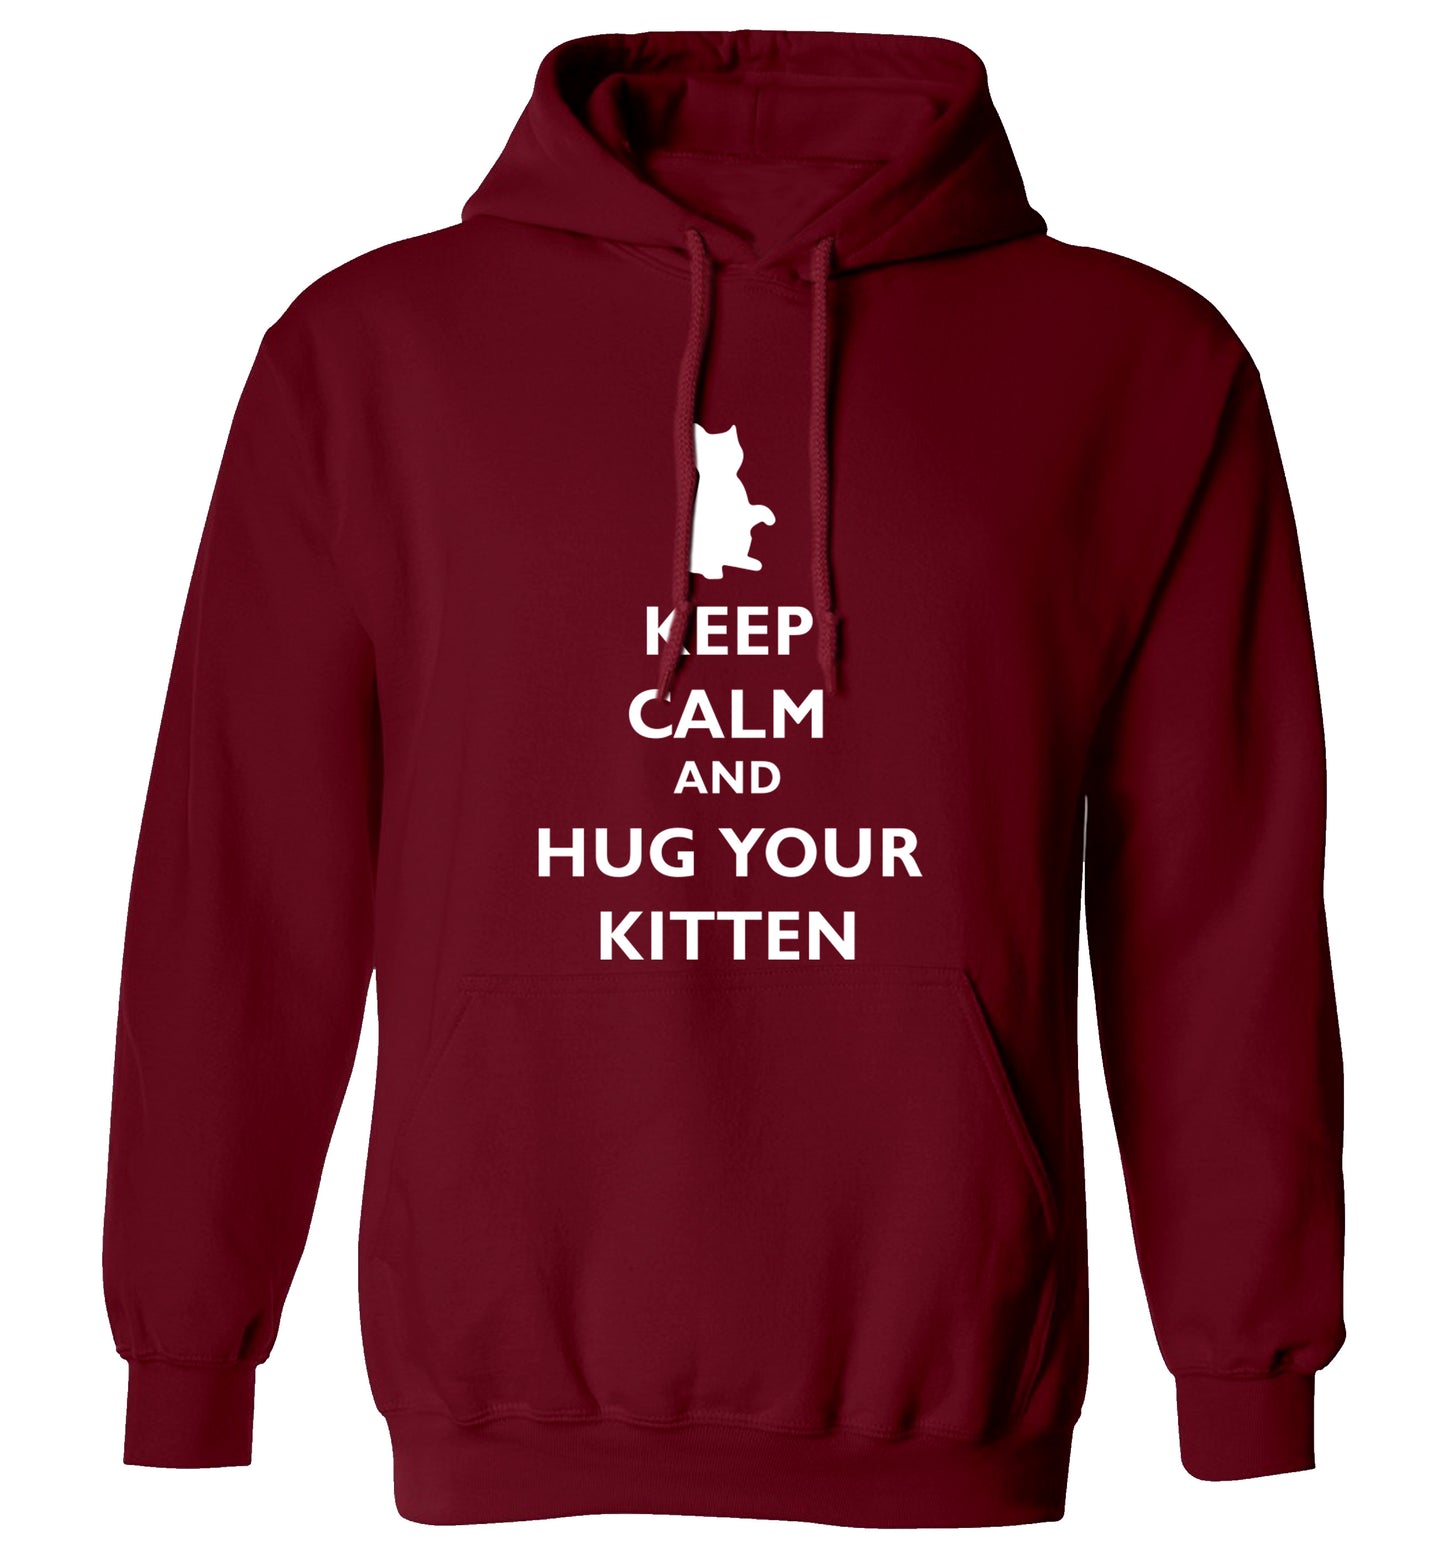 Keep calm and hug your kitten adults unisex maroon hoodie 2XL